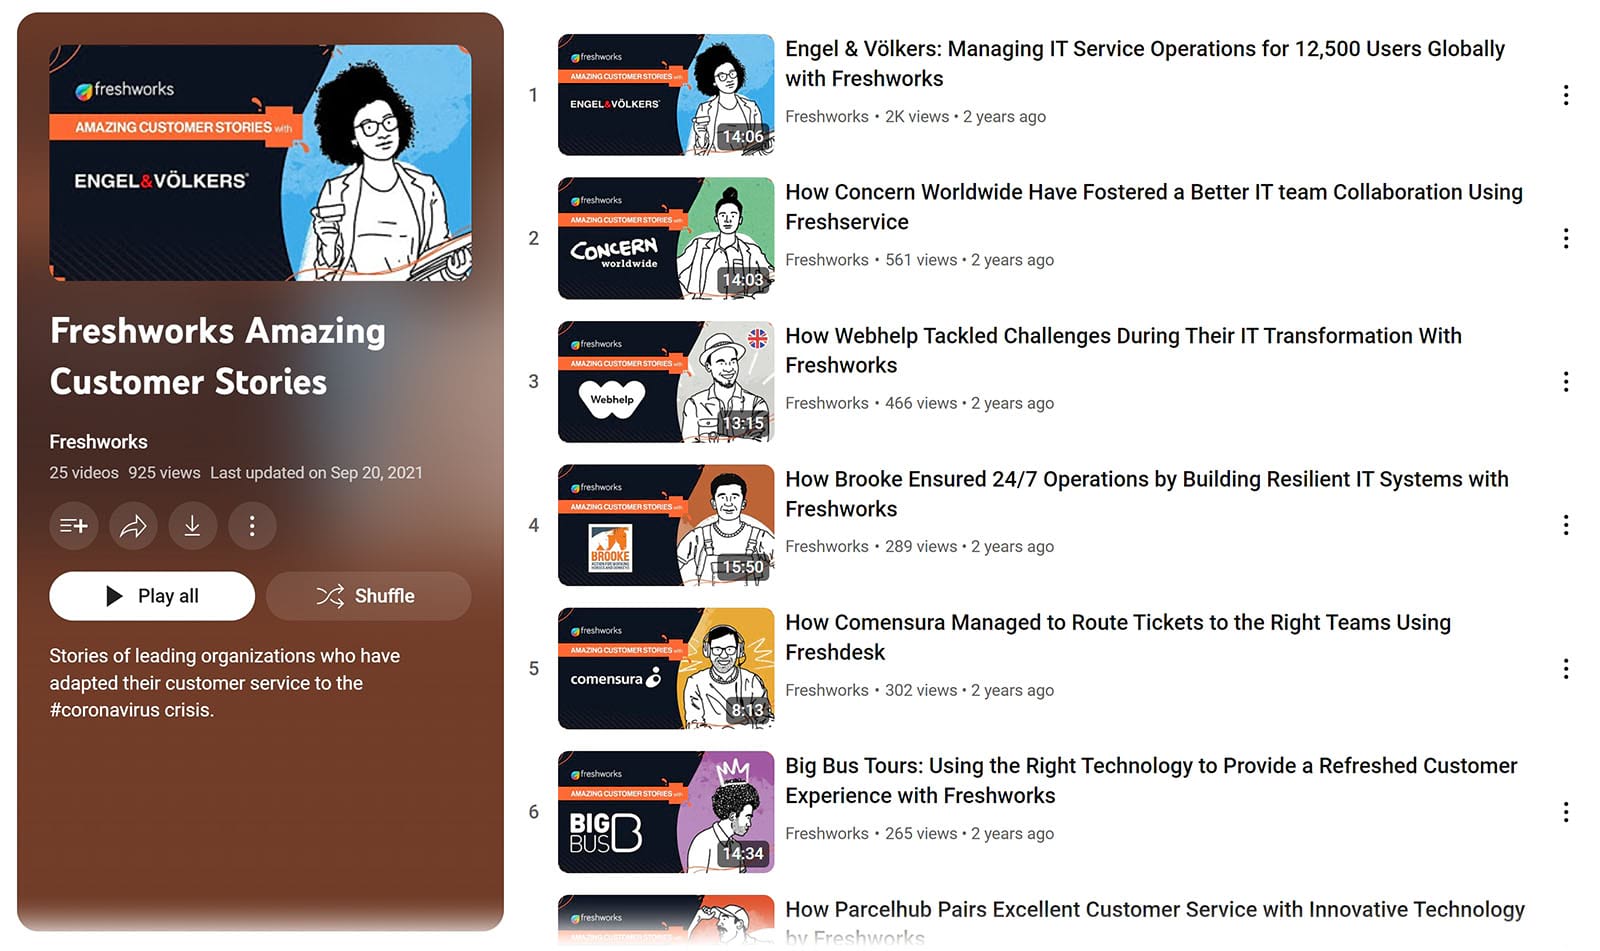 Freshworks Amazing Customer Stories playlist showing playlist description and videos.